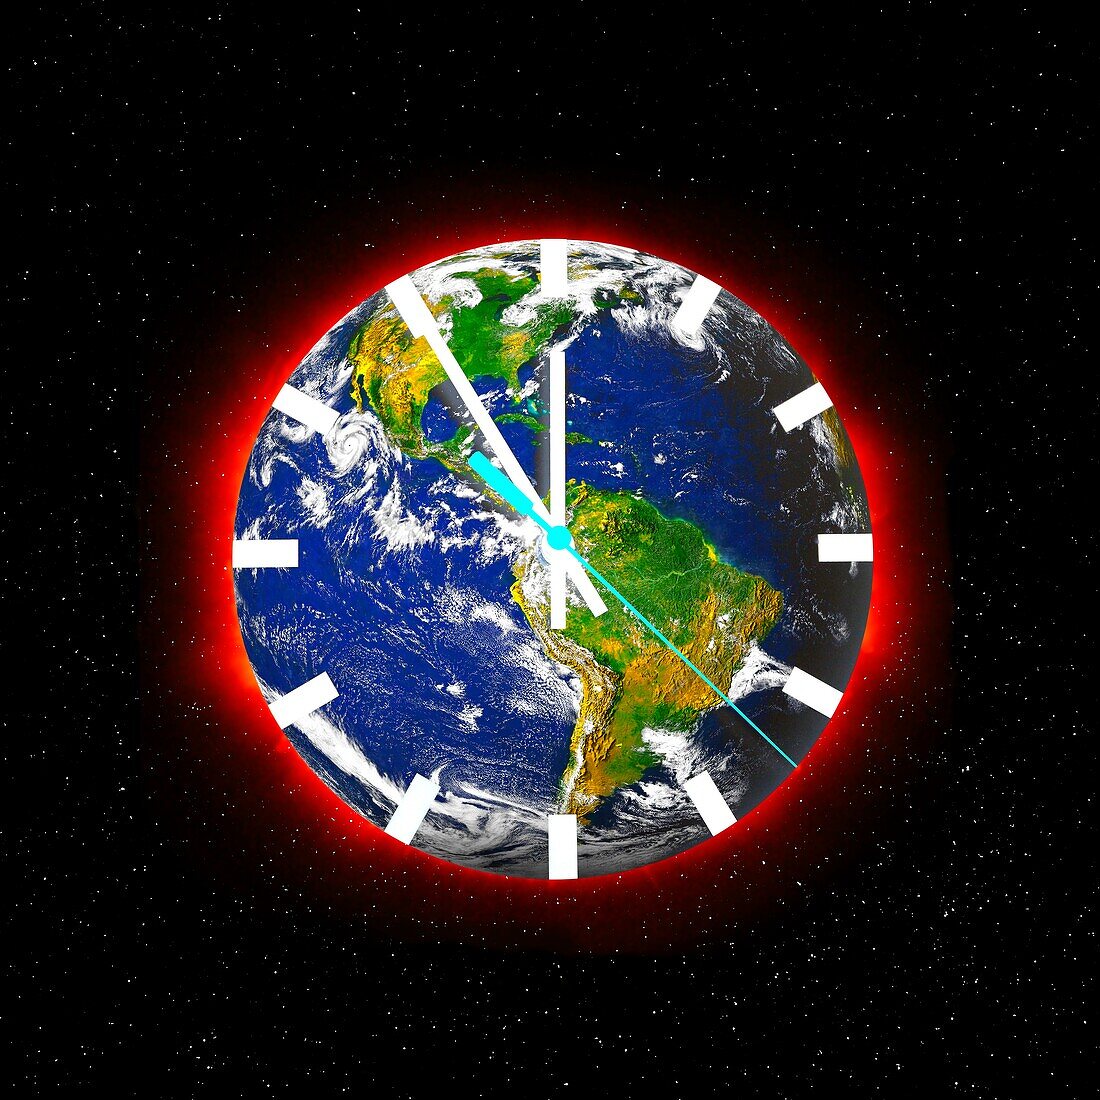 Doomsday Clock, conceptual illustration